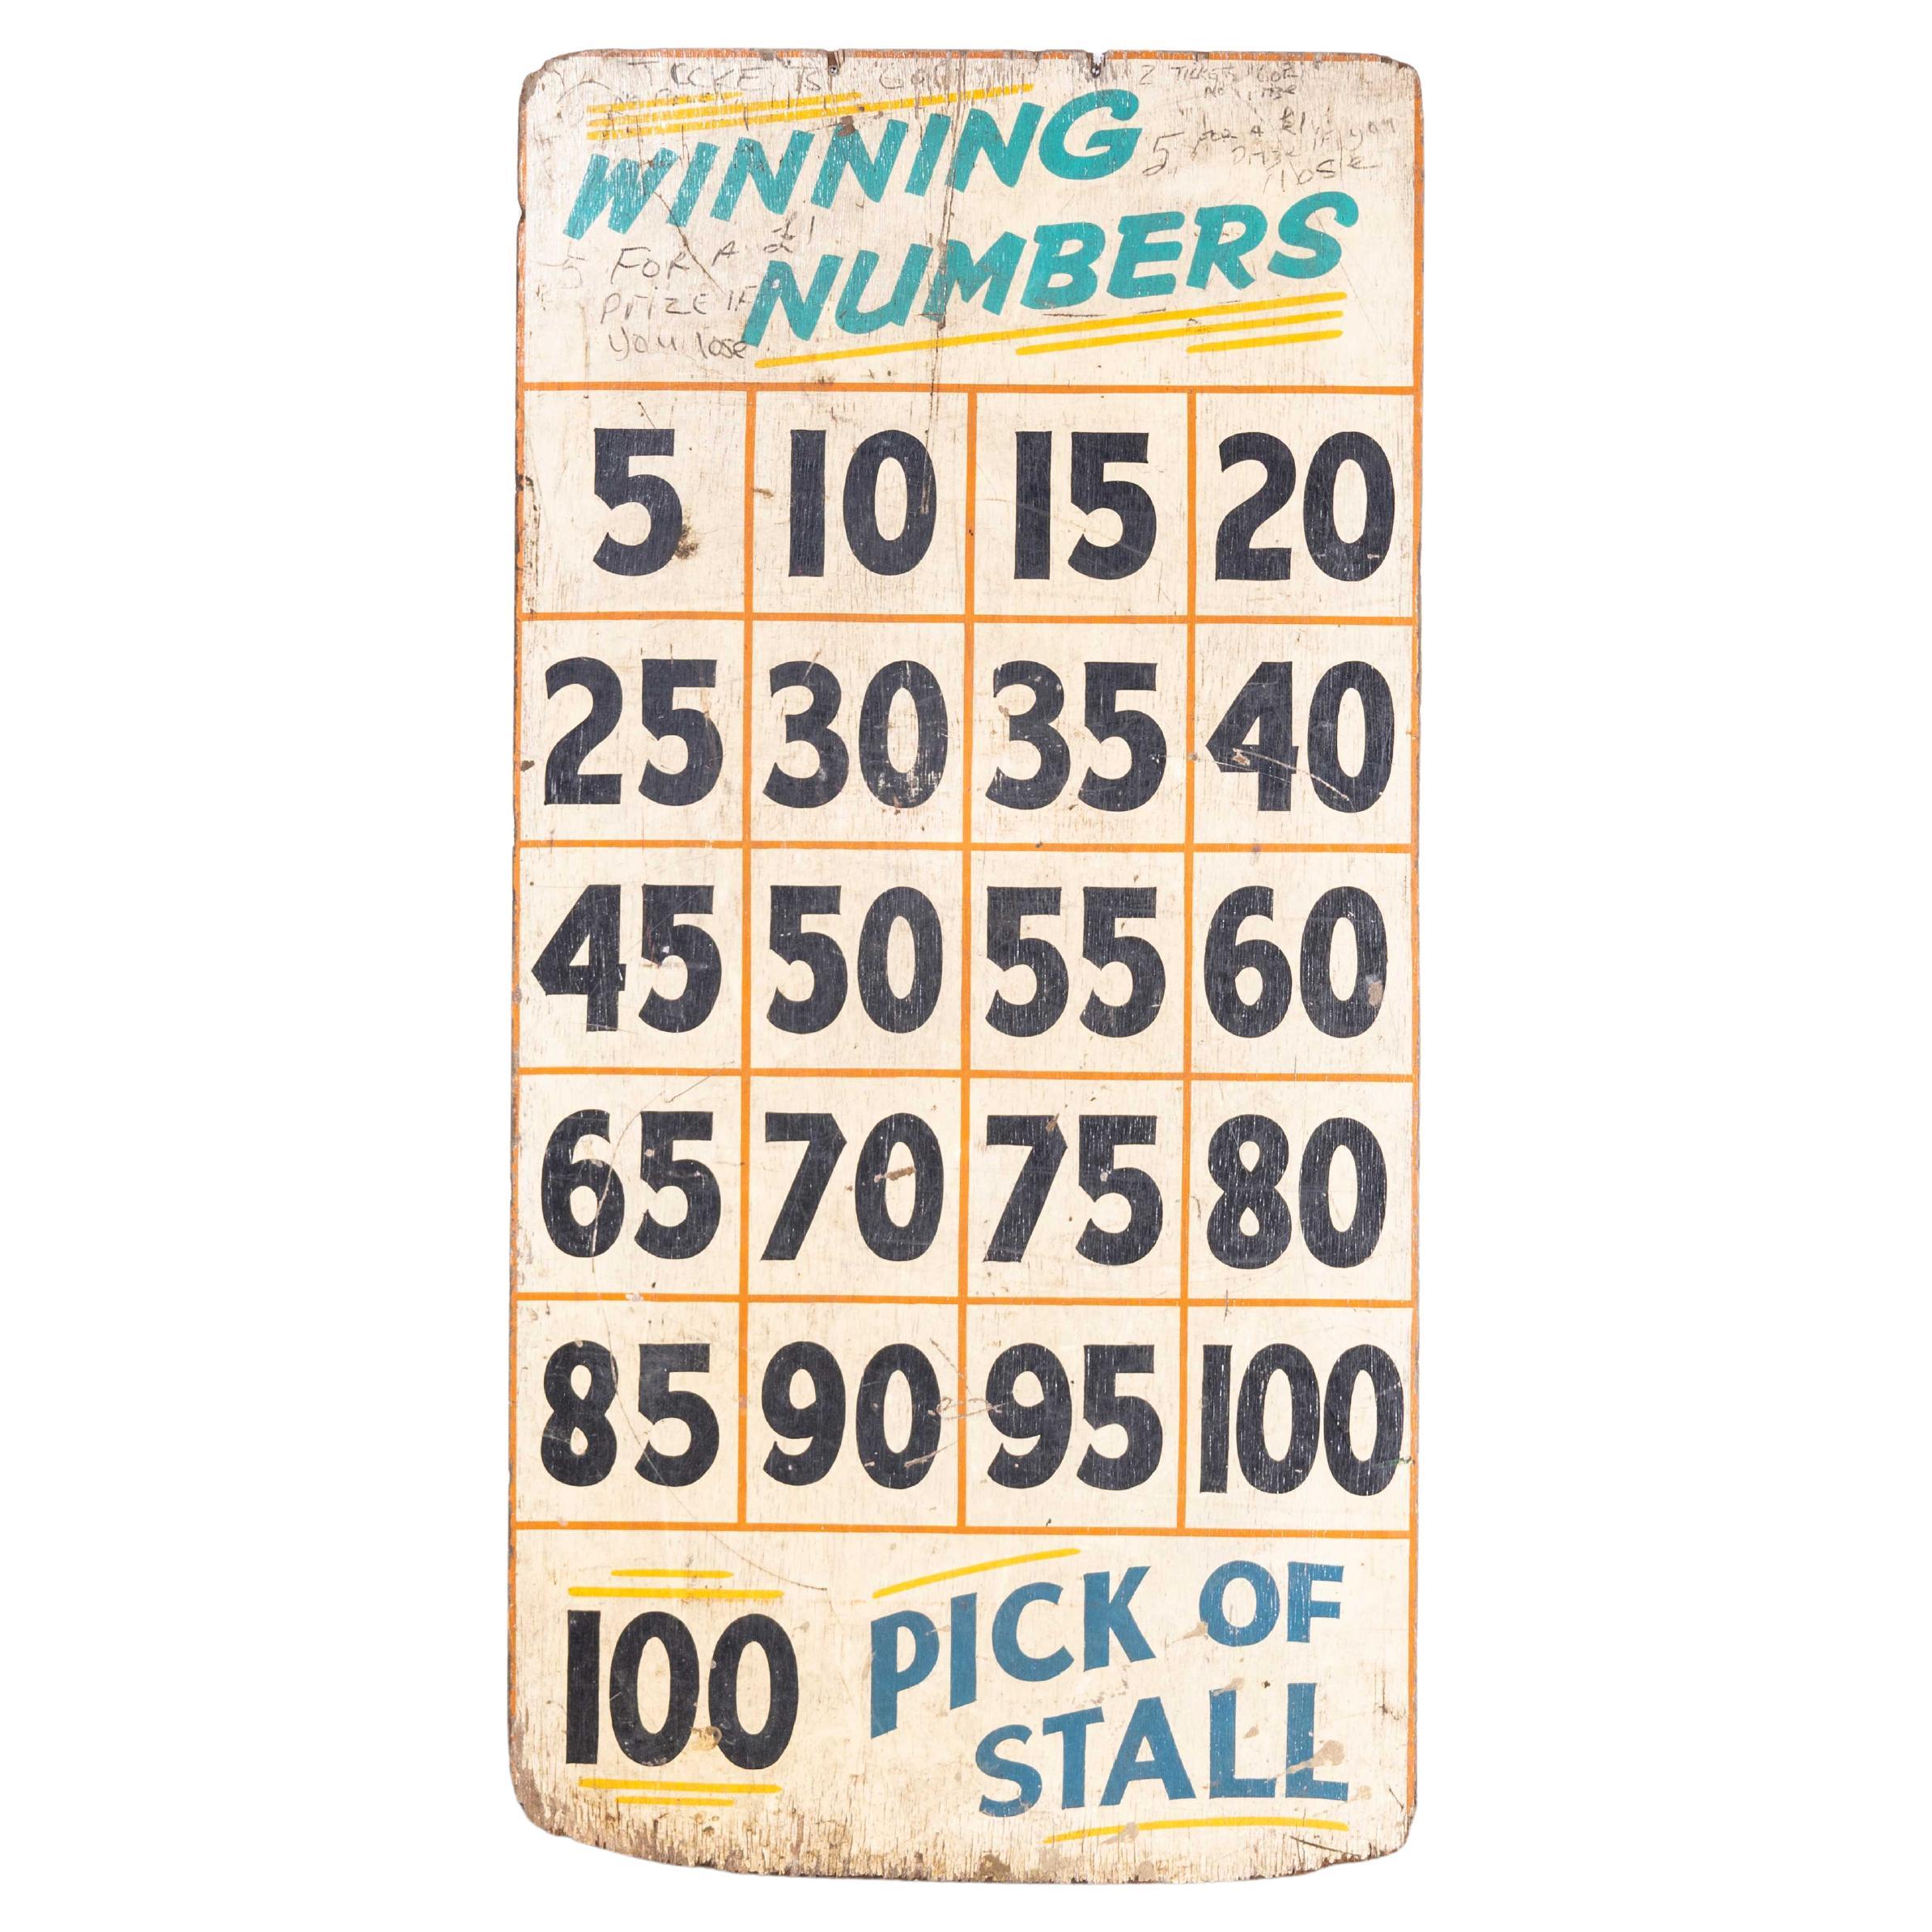 Original Winning Numbers Großes Ausstellungsschild aus den 1950er Jahren – Odds